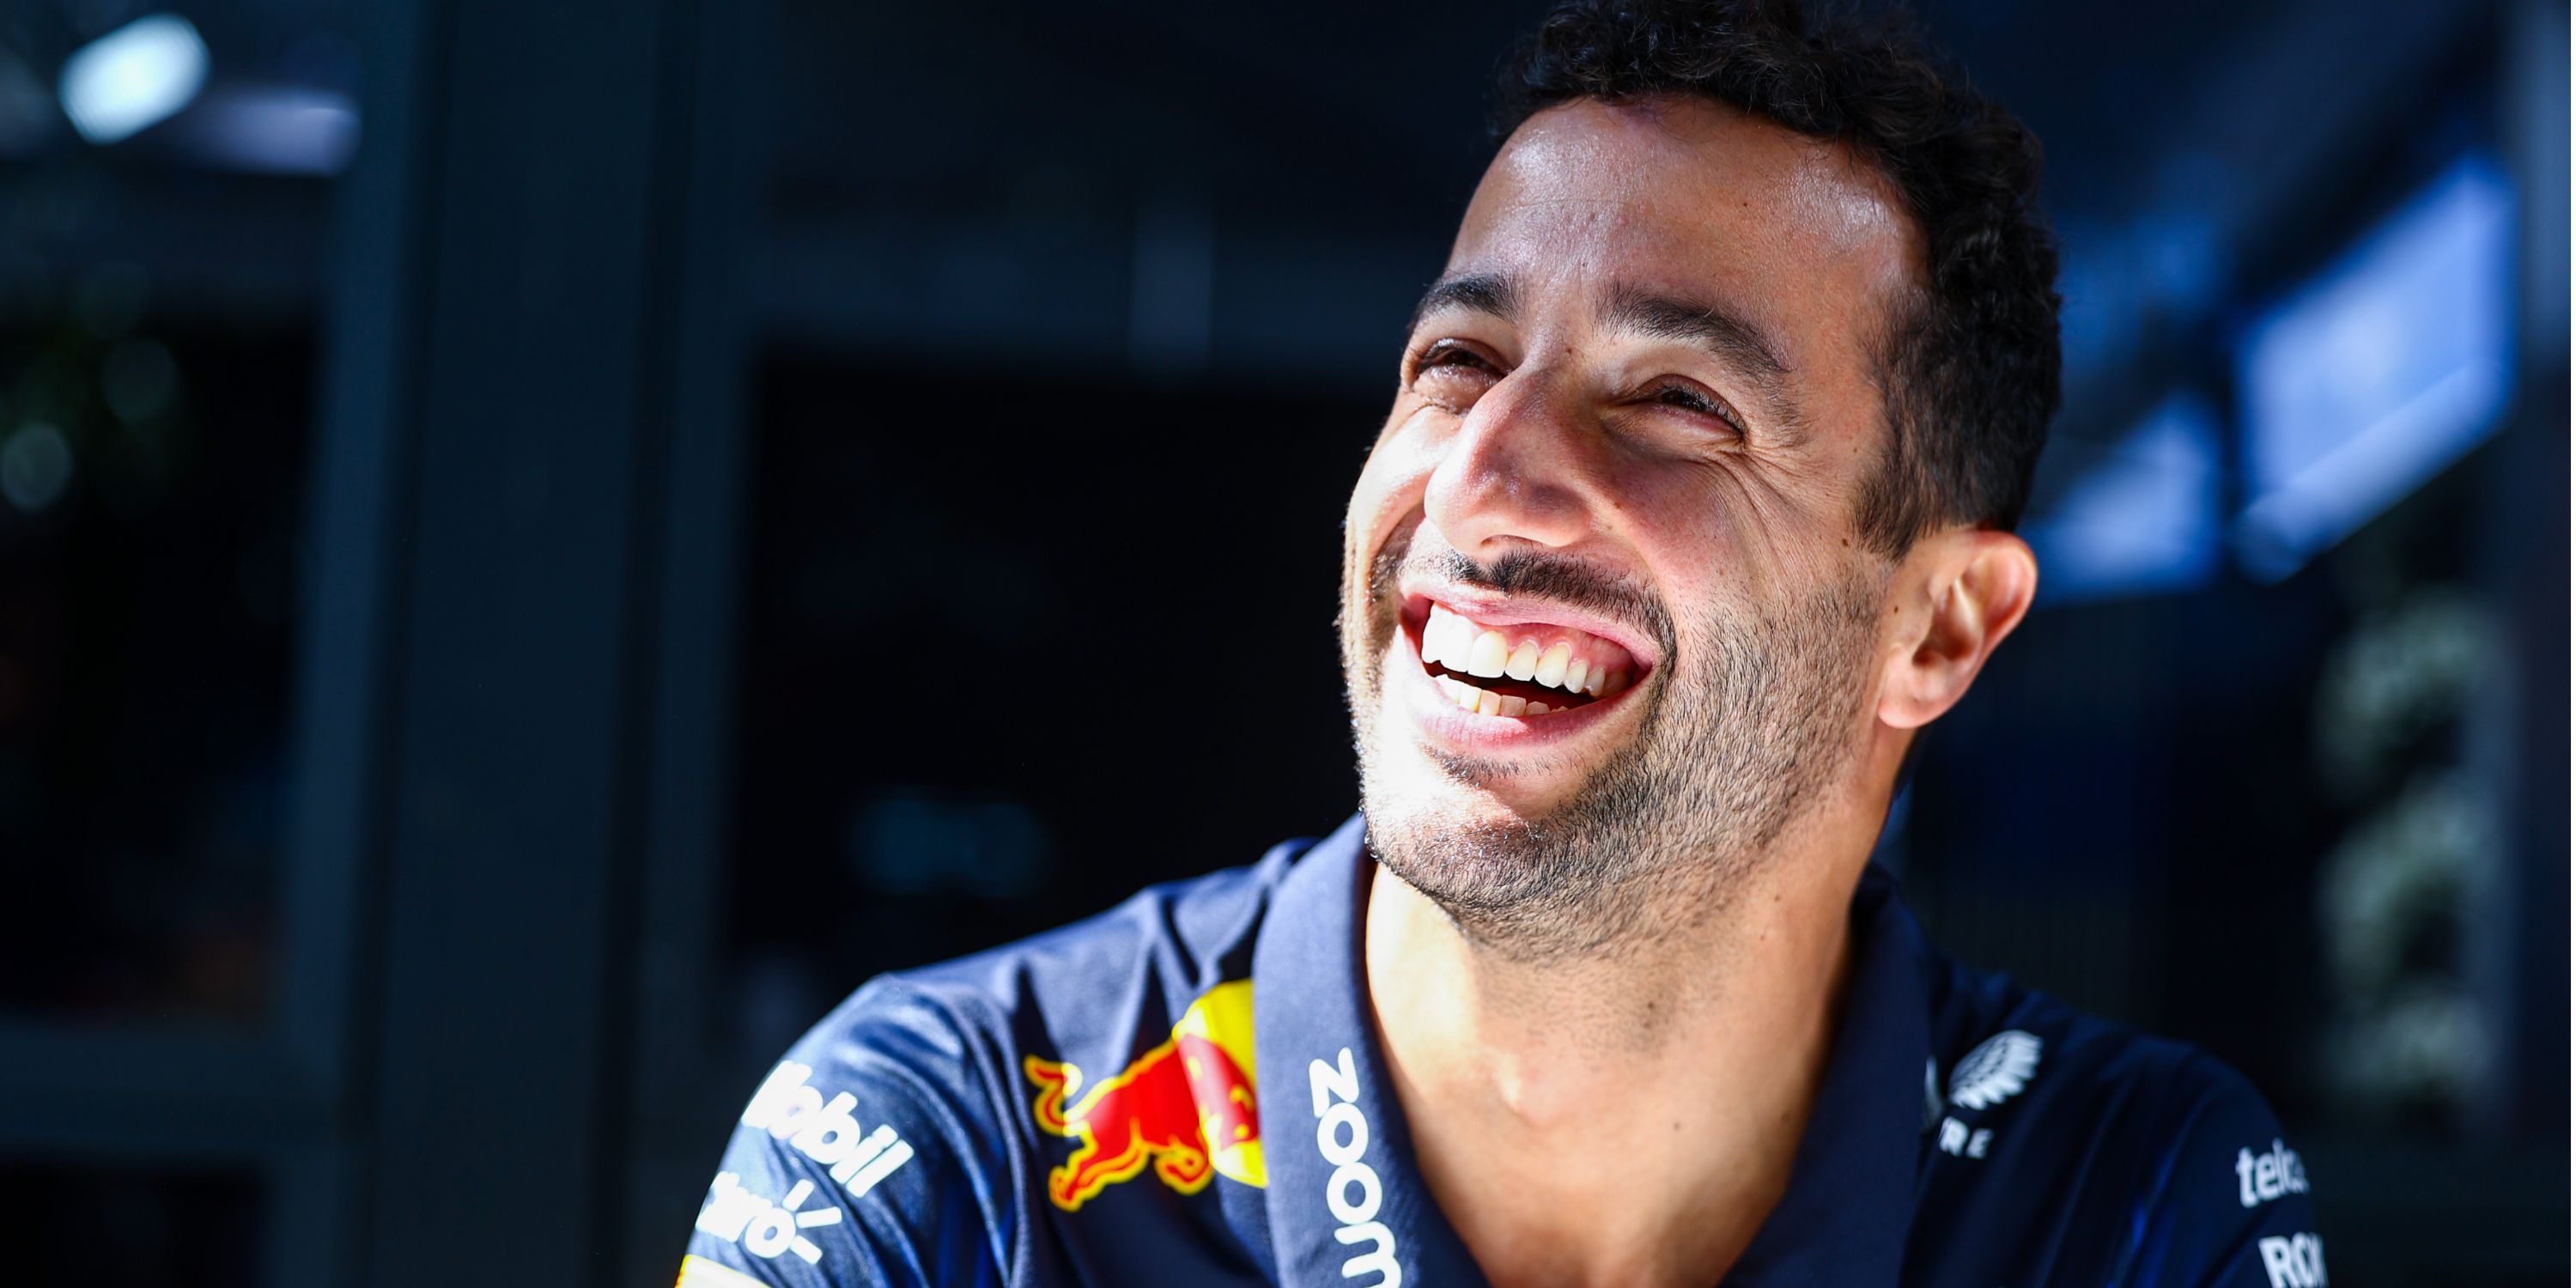 Daniel Ricciardo in the Australian GP paddock